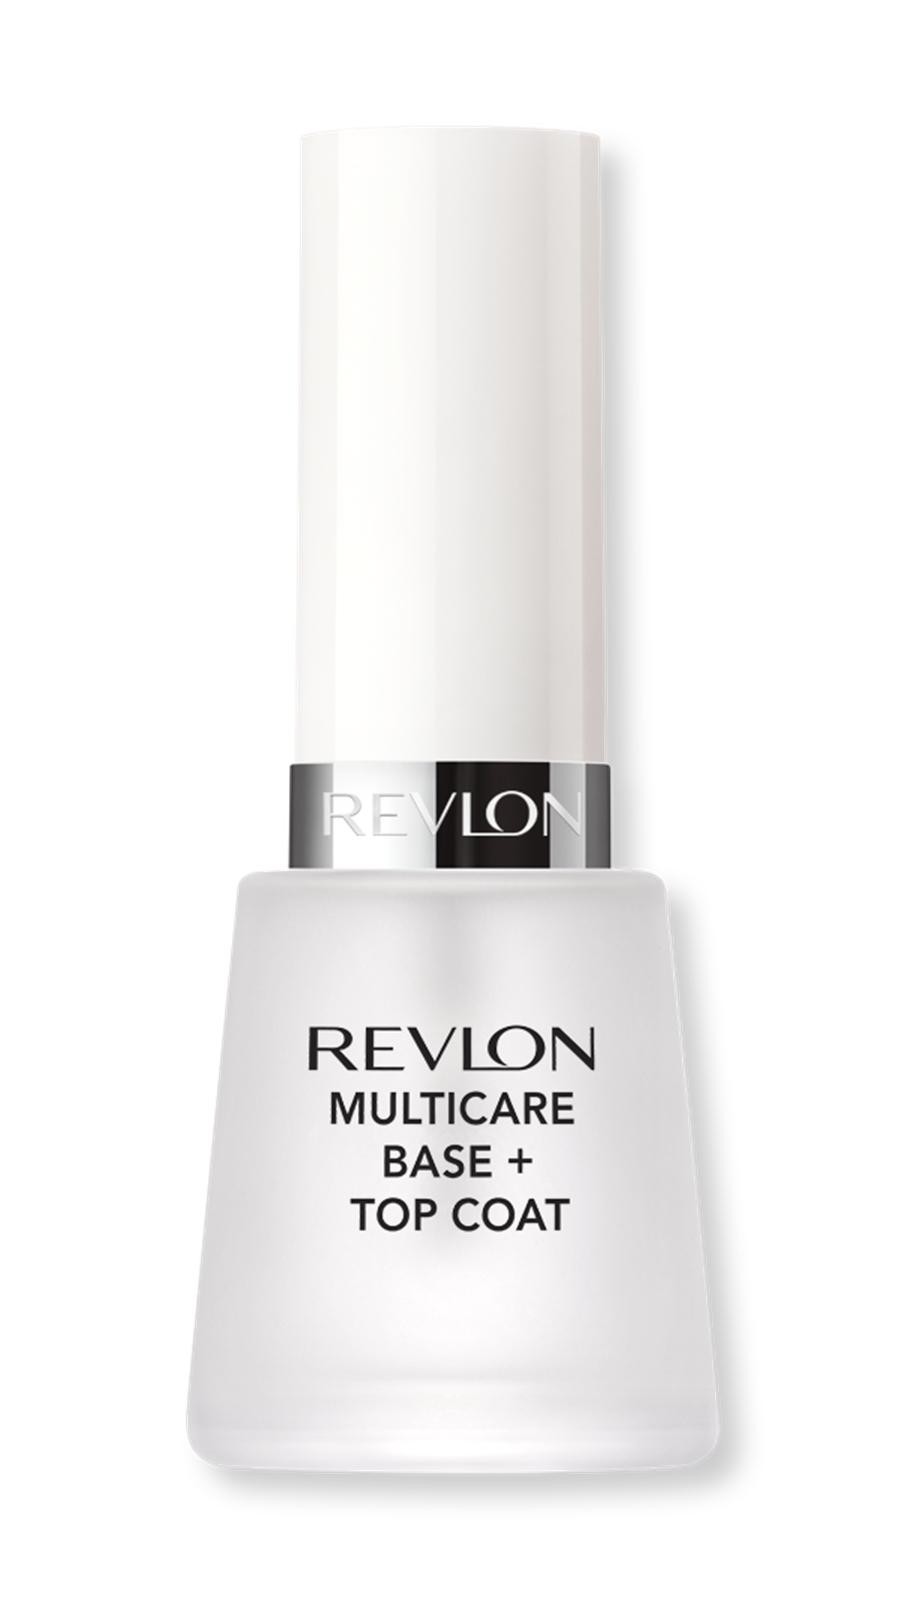 Revlon Multicare Base + Top Coat